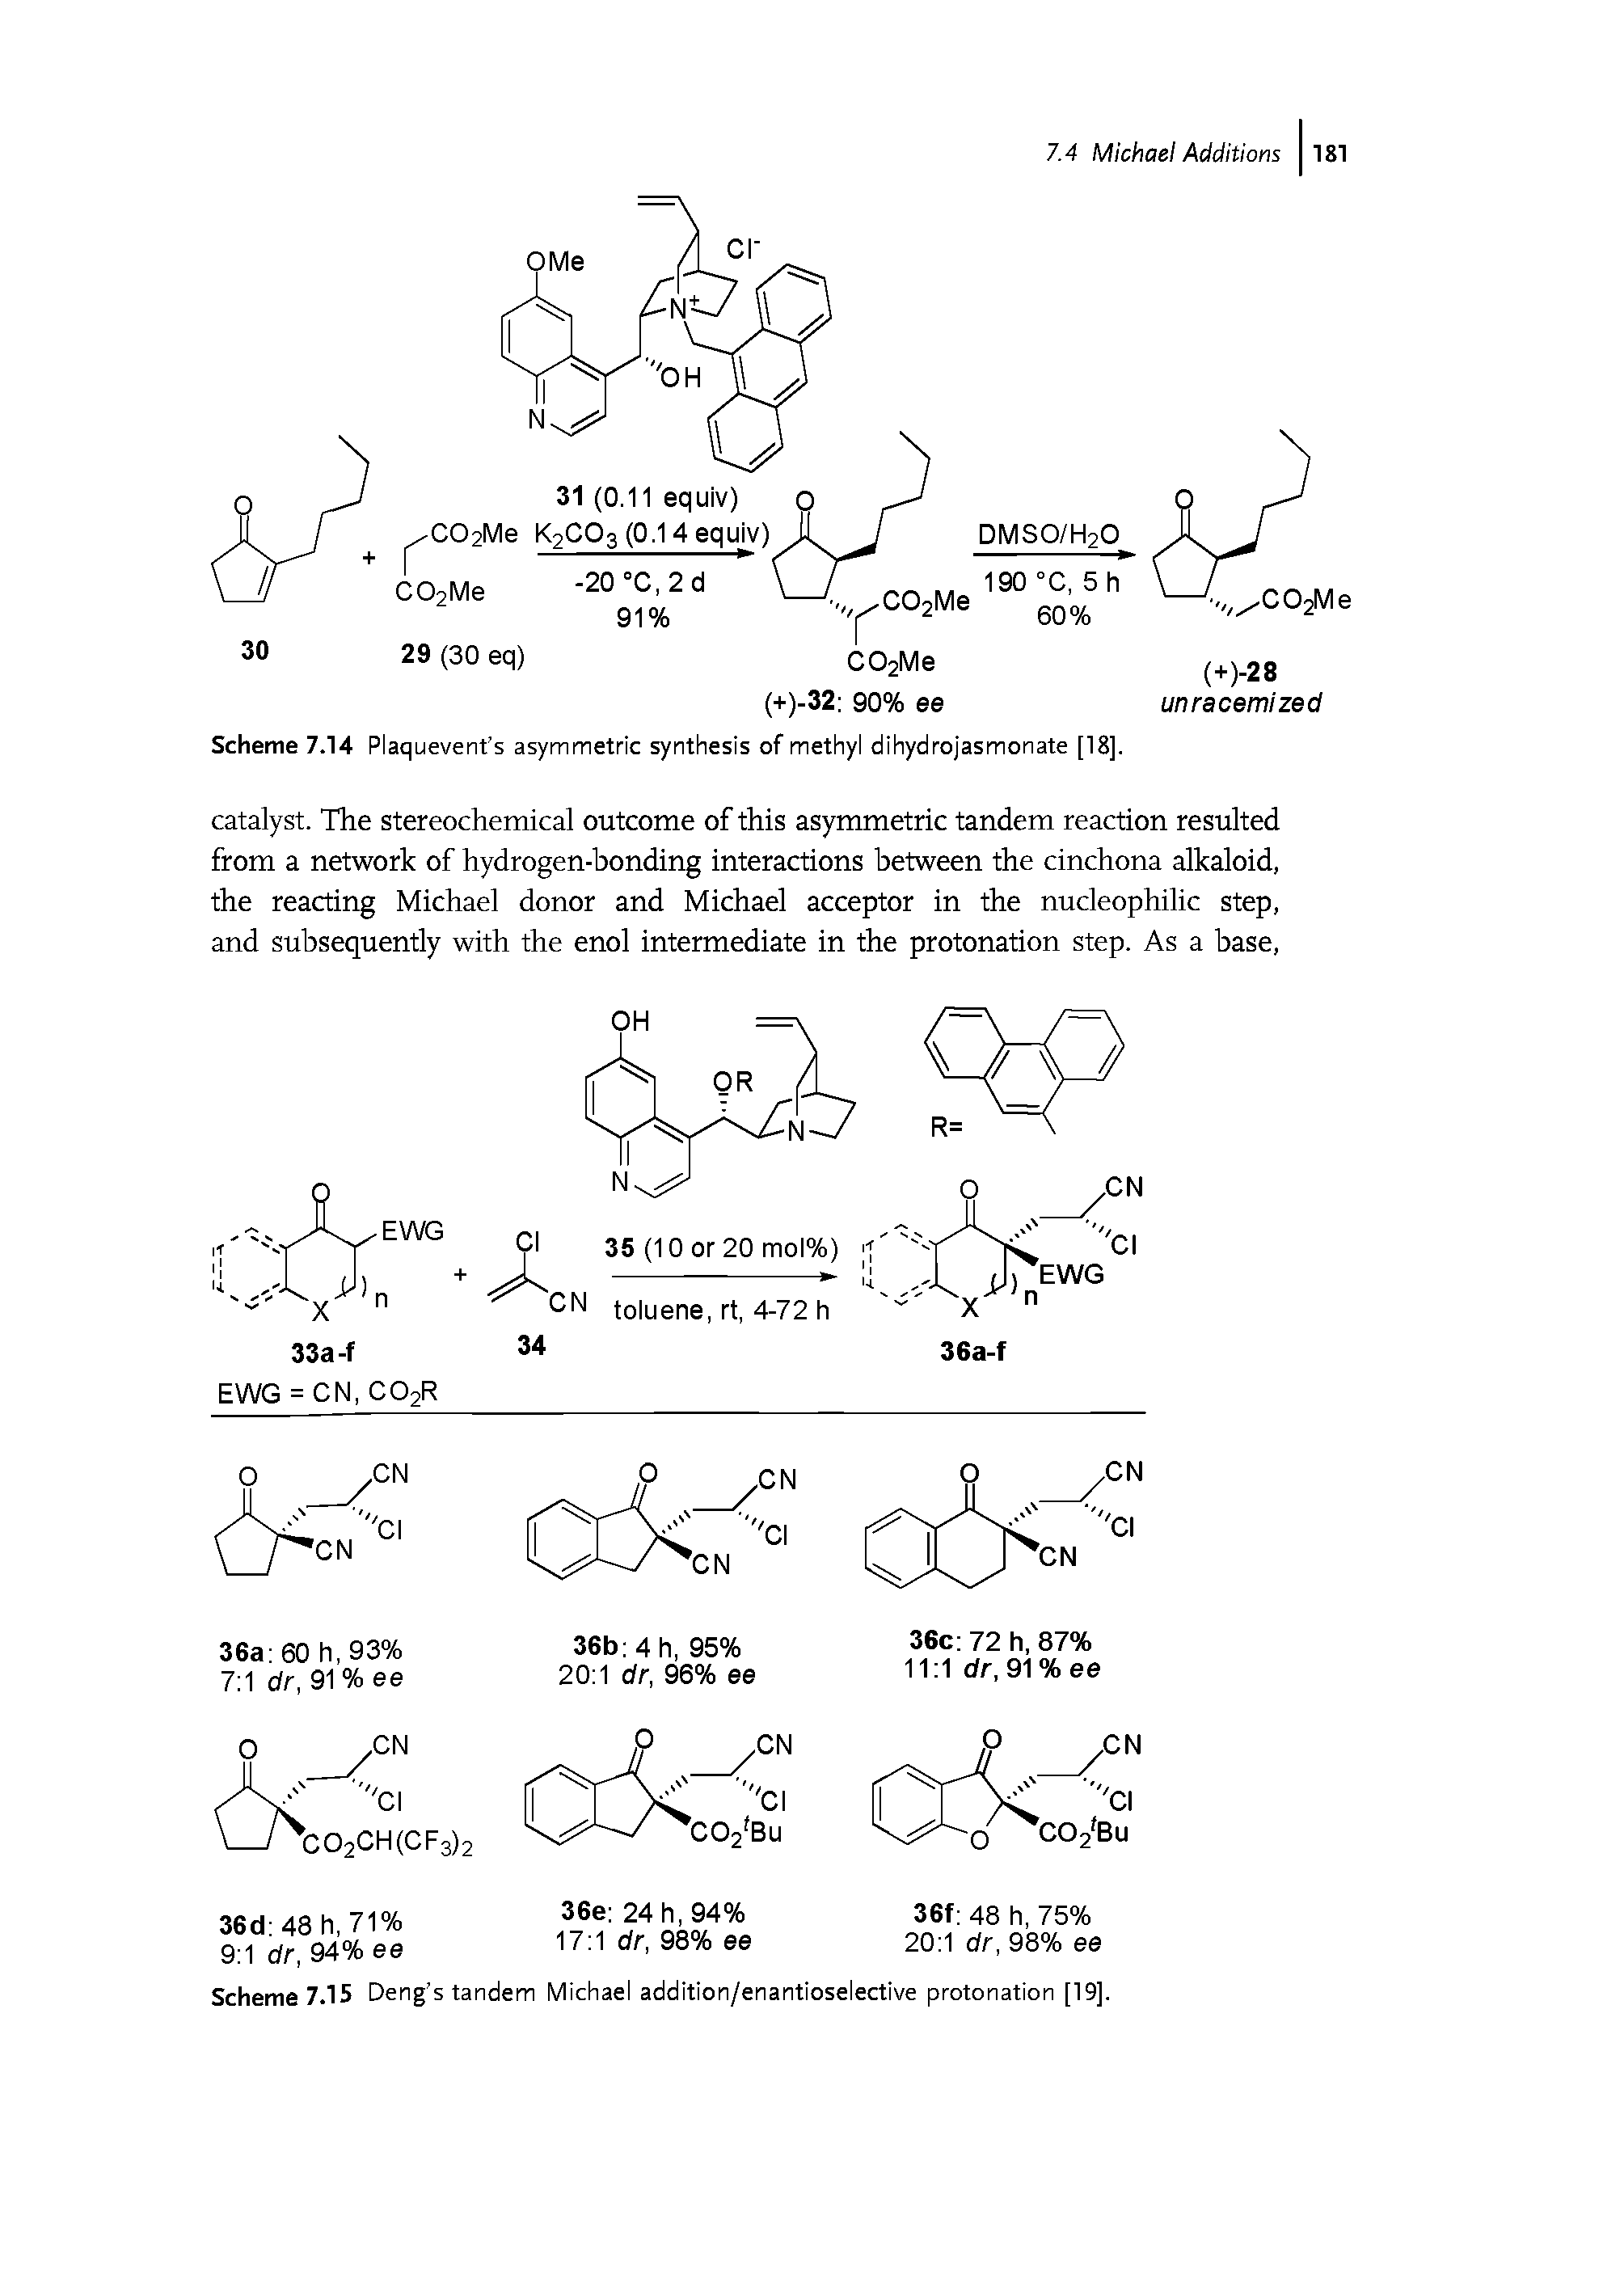 Scheme 7.14 Plaquevent s asymmetric synthesis of methyl dihydrojasmonate [18].